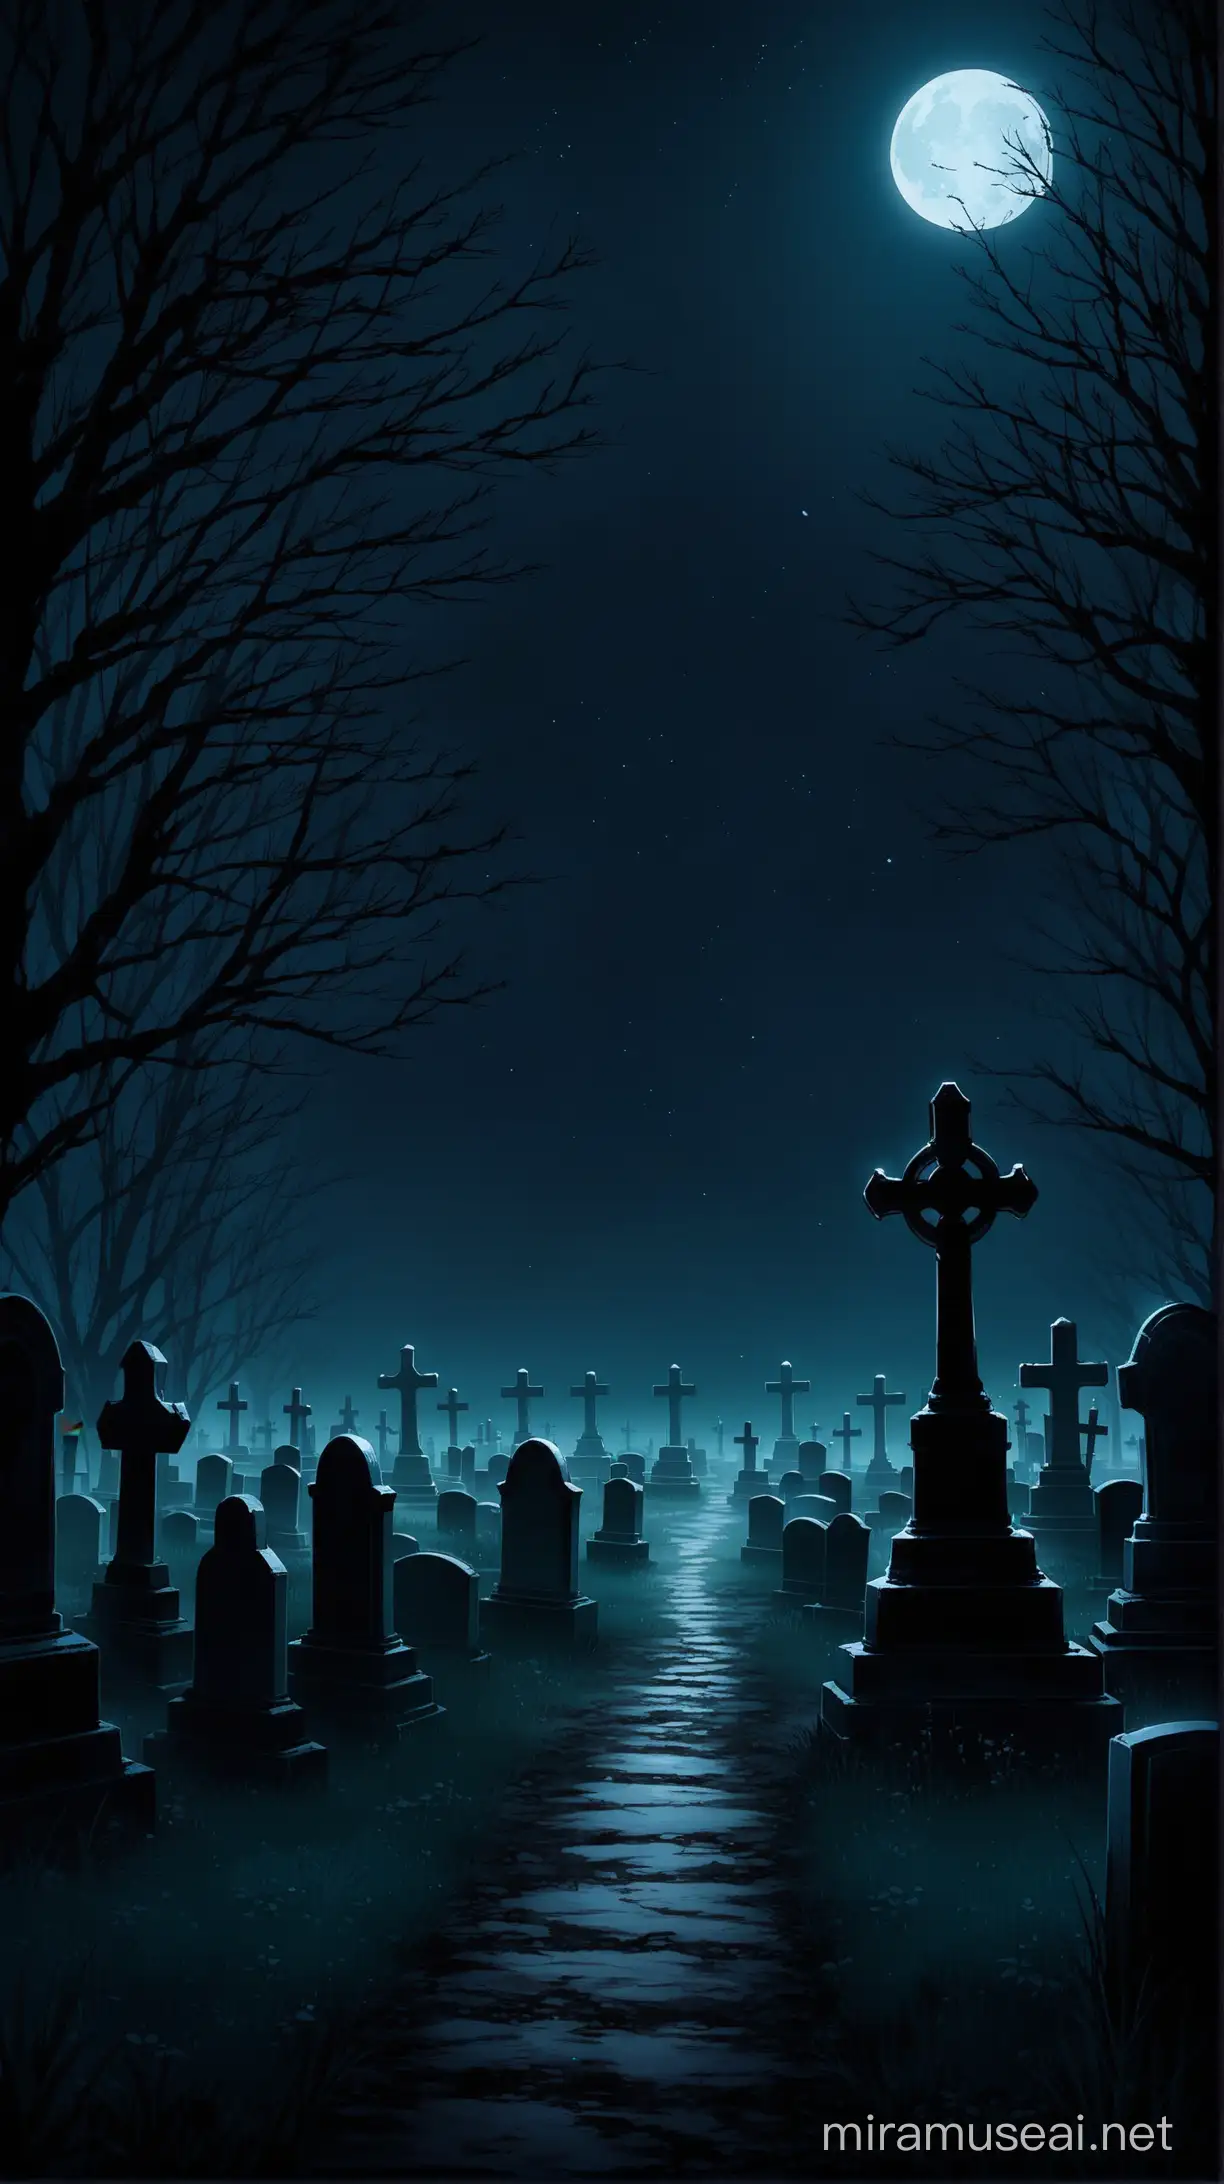 Graveyard, quiet, dim light, night, moonlight, no characters